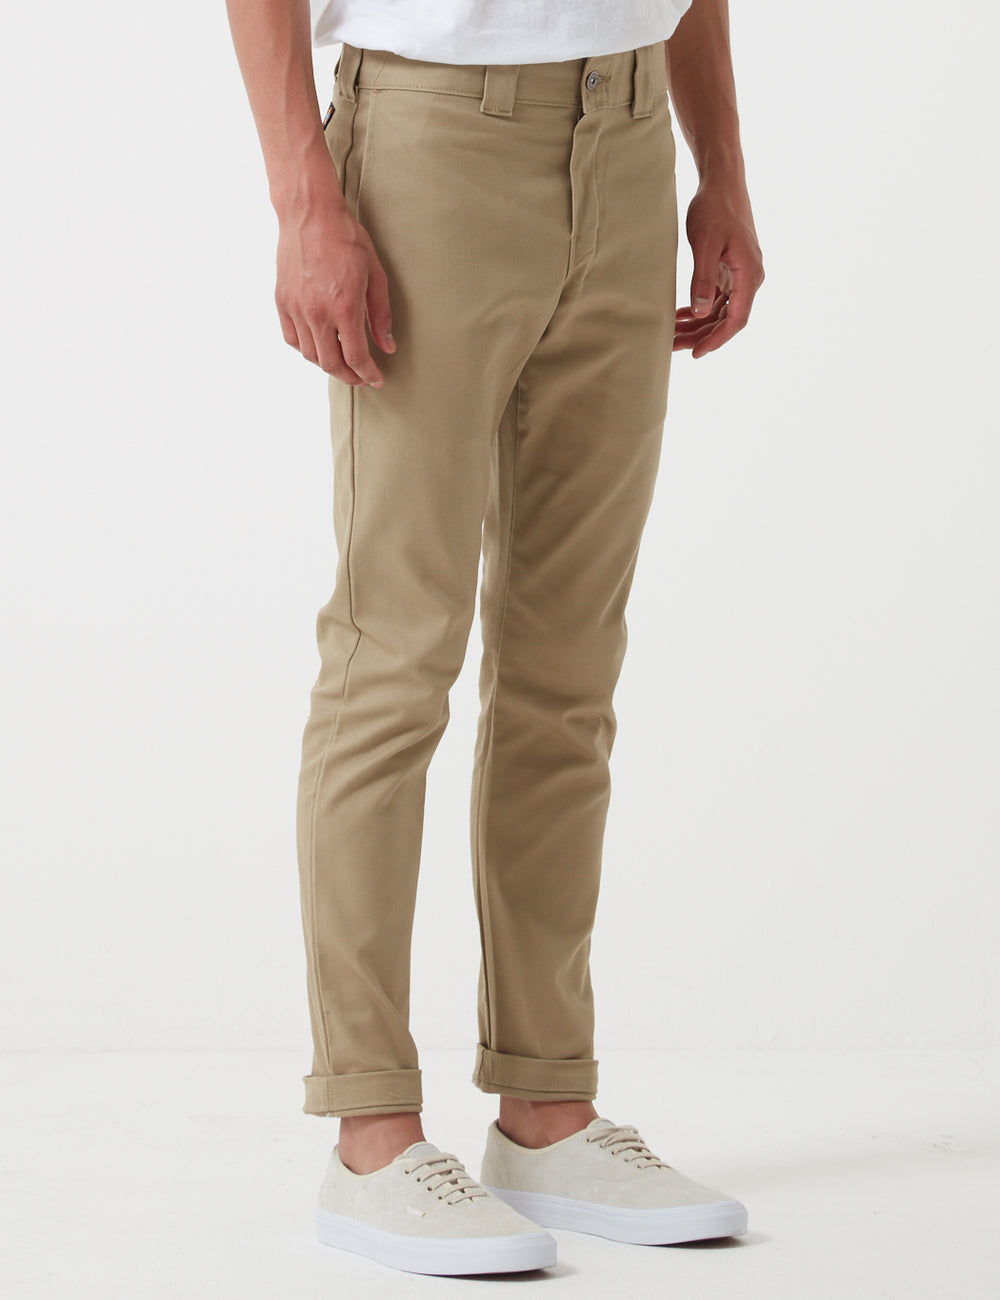 803 Chino Trousers (Slim Skinny) - Khaki EXCESS USA